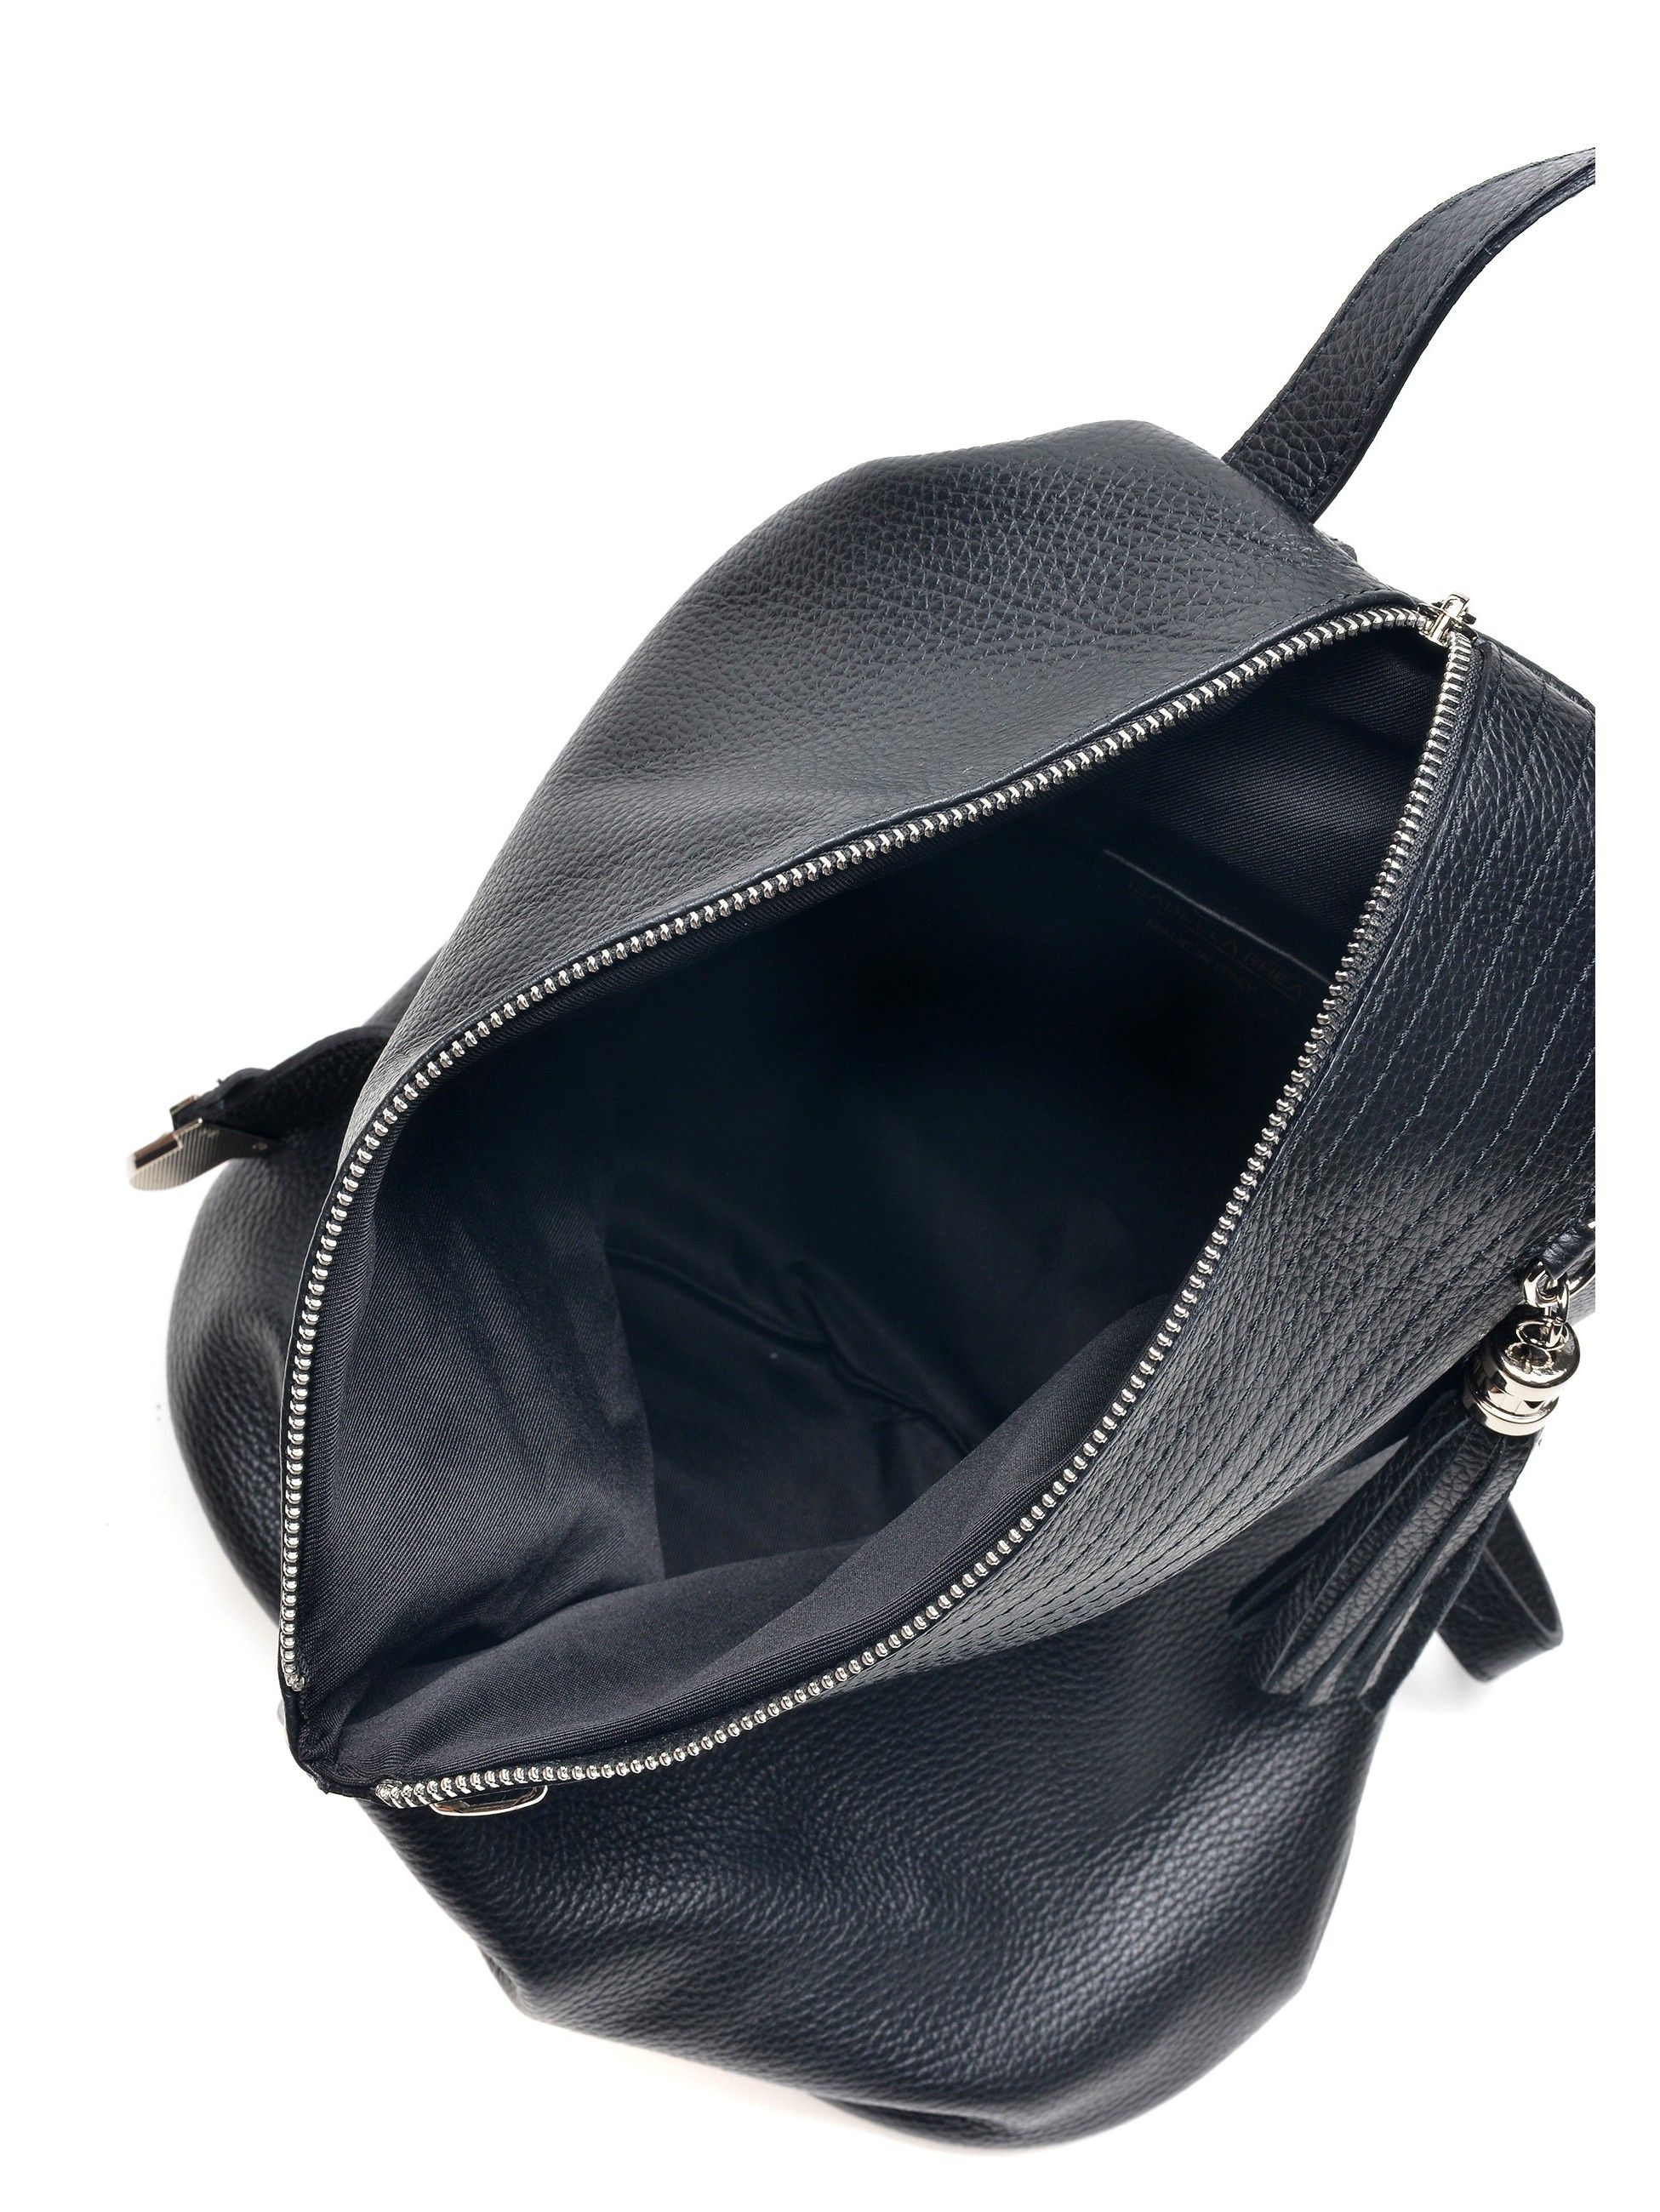 Backpack
100% cow leather
Front zip closure
Inner zip pocket
Back zip pocket
Tassel detail
Dimensions (L): 43.5x35x17 cm
Handle: 24cm
Shoulder strap: 80cm x 2 cm